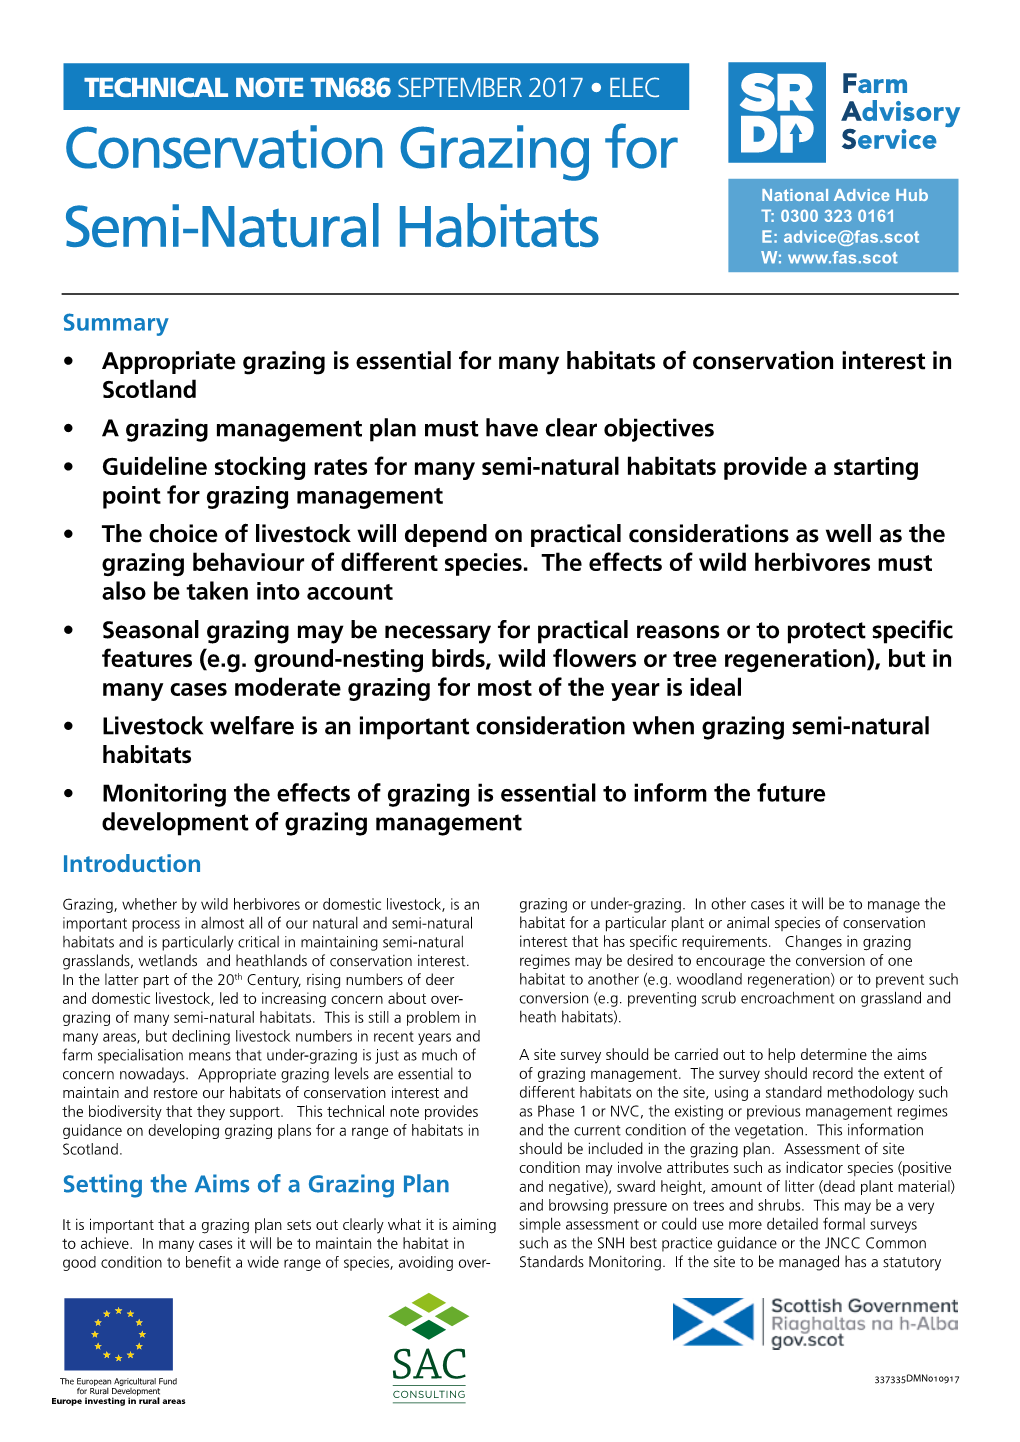 Conservation Grazing for Semi-Natural Habitats